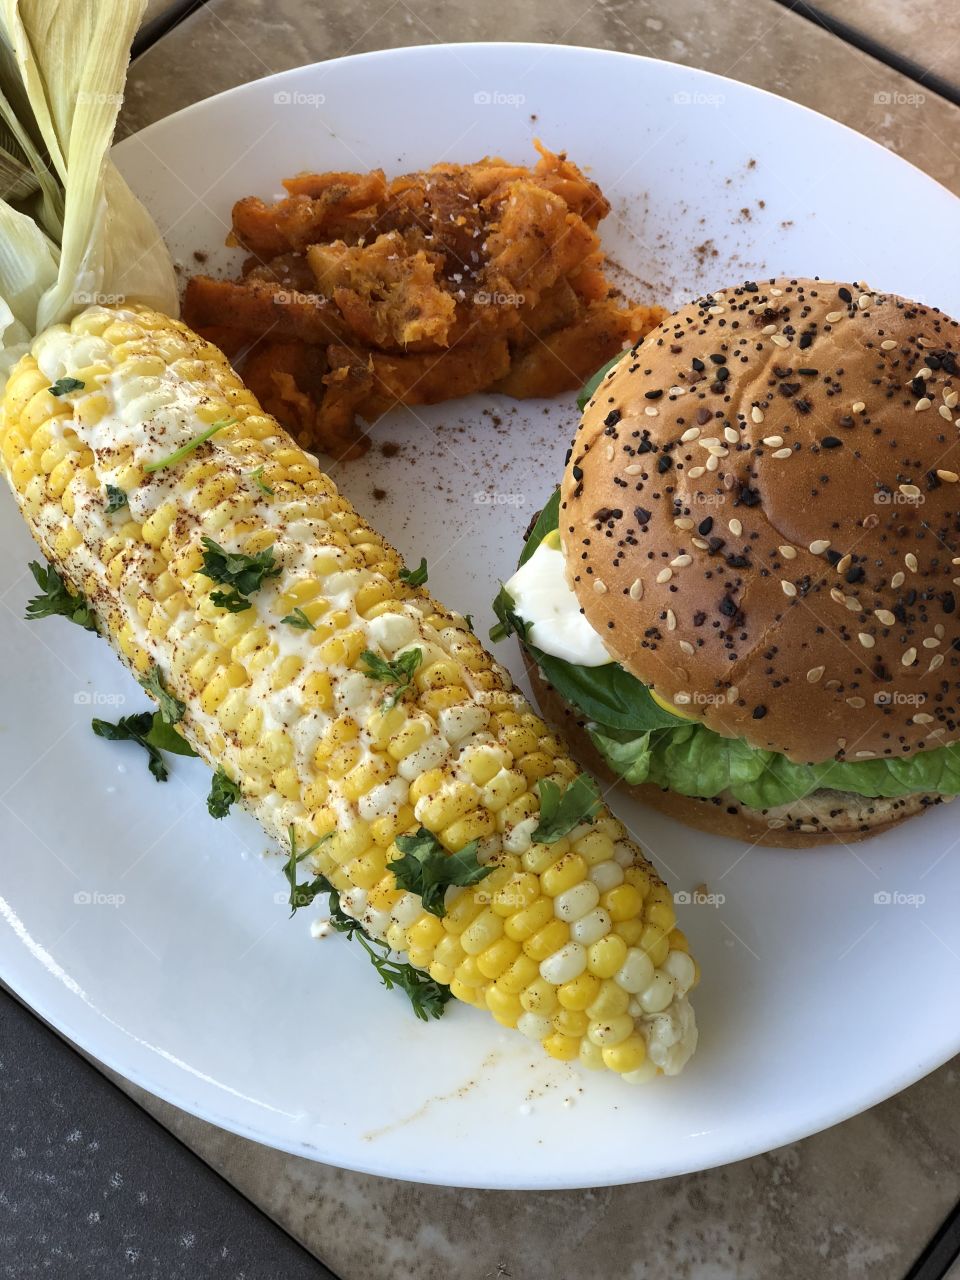 June backyard Barbecue (corn,burgers,and sweet potatoes)